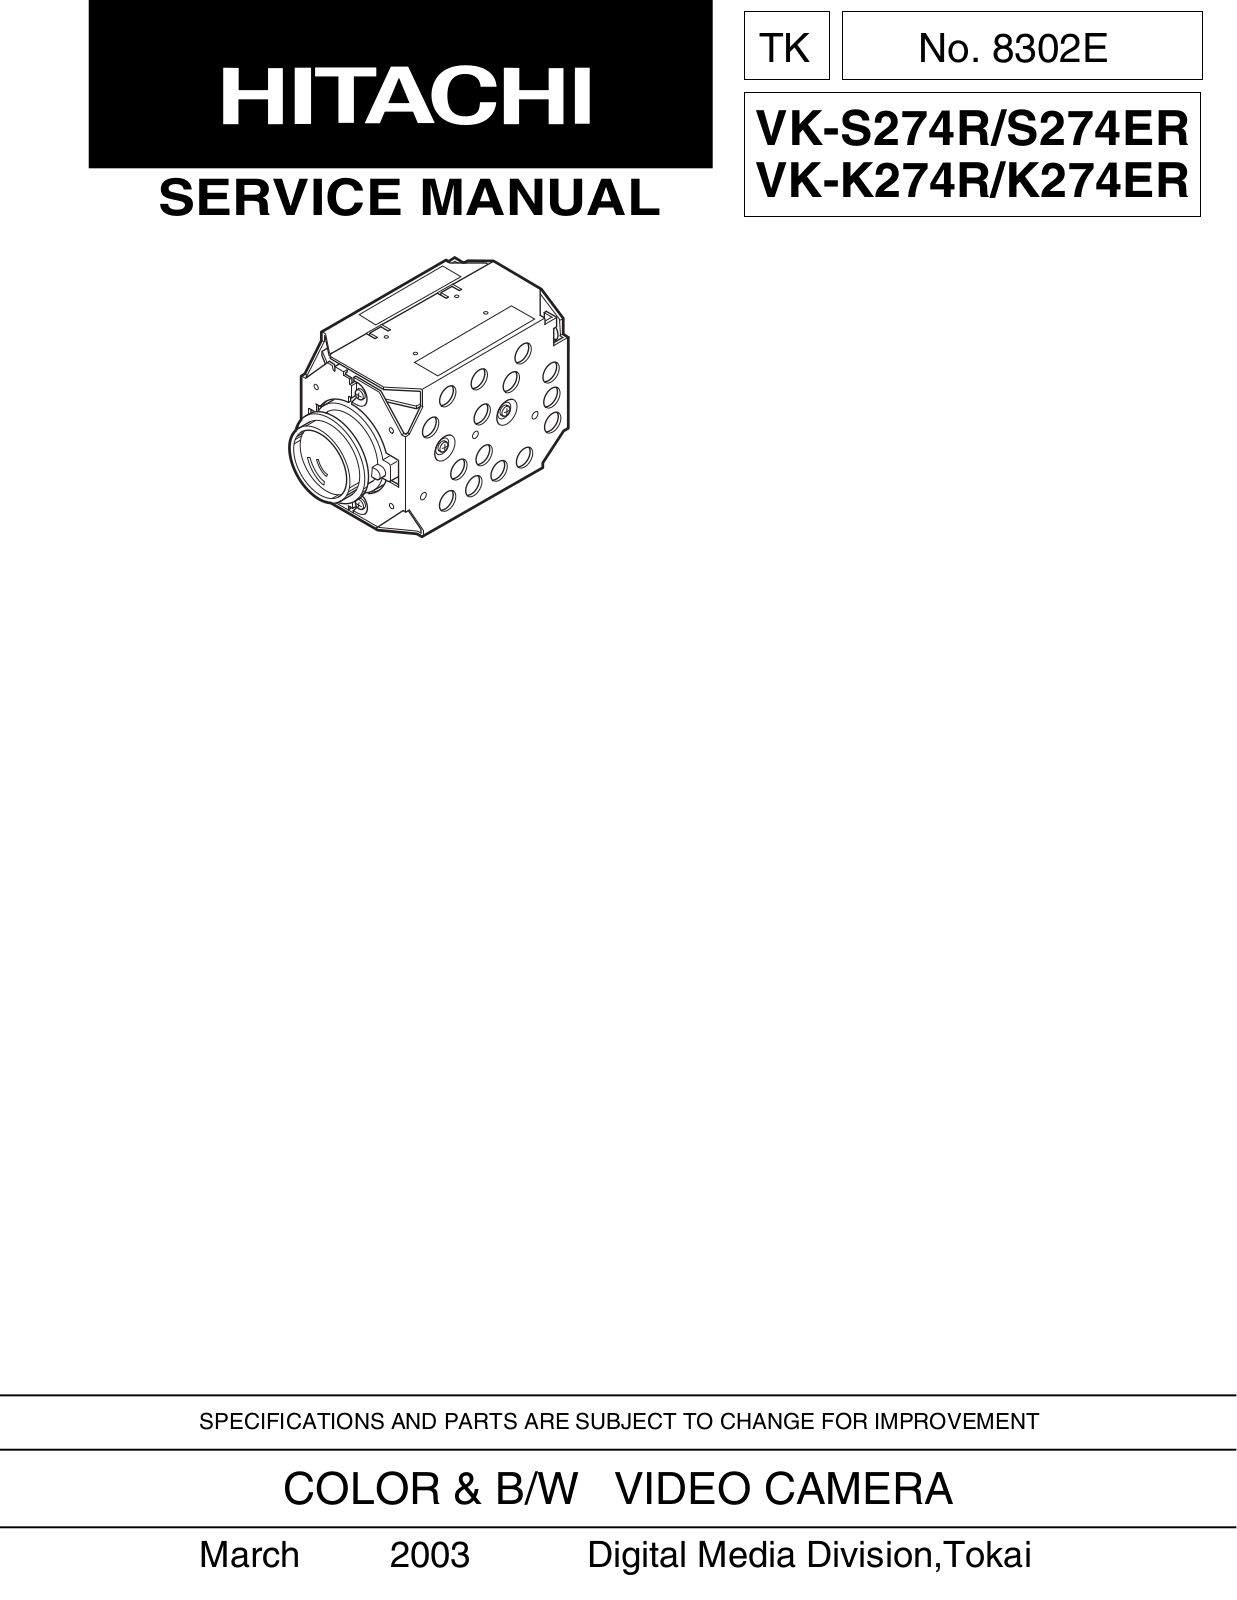 Hitachi vk-s274r Service Manual